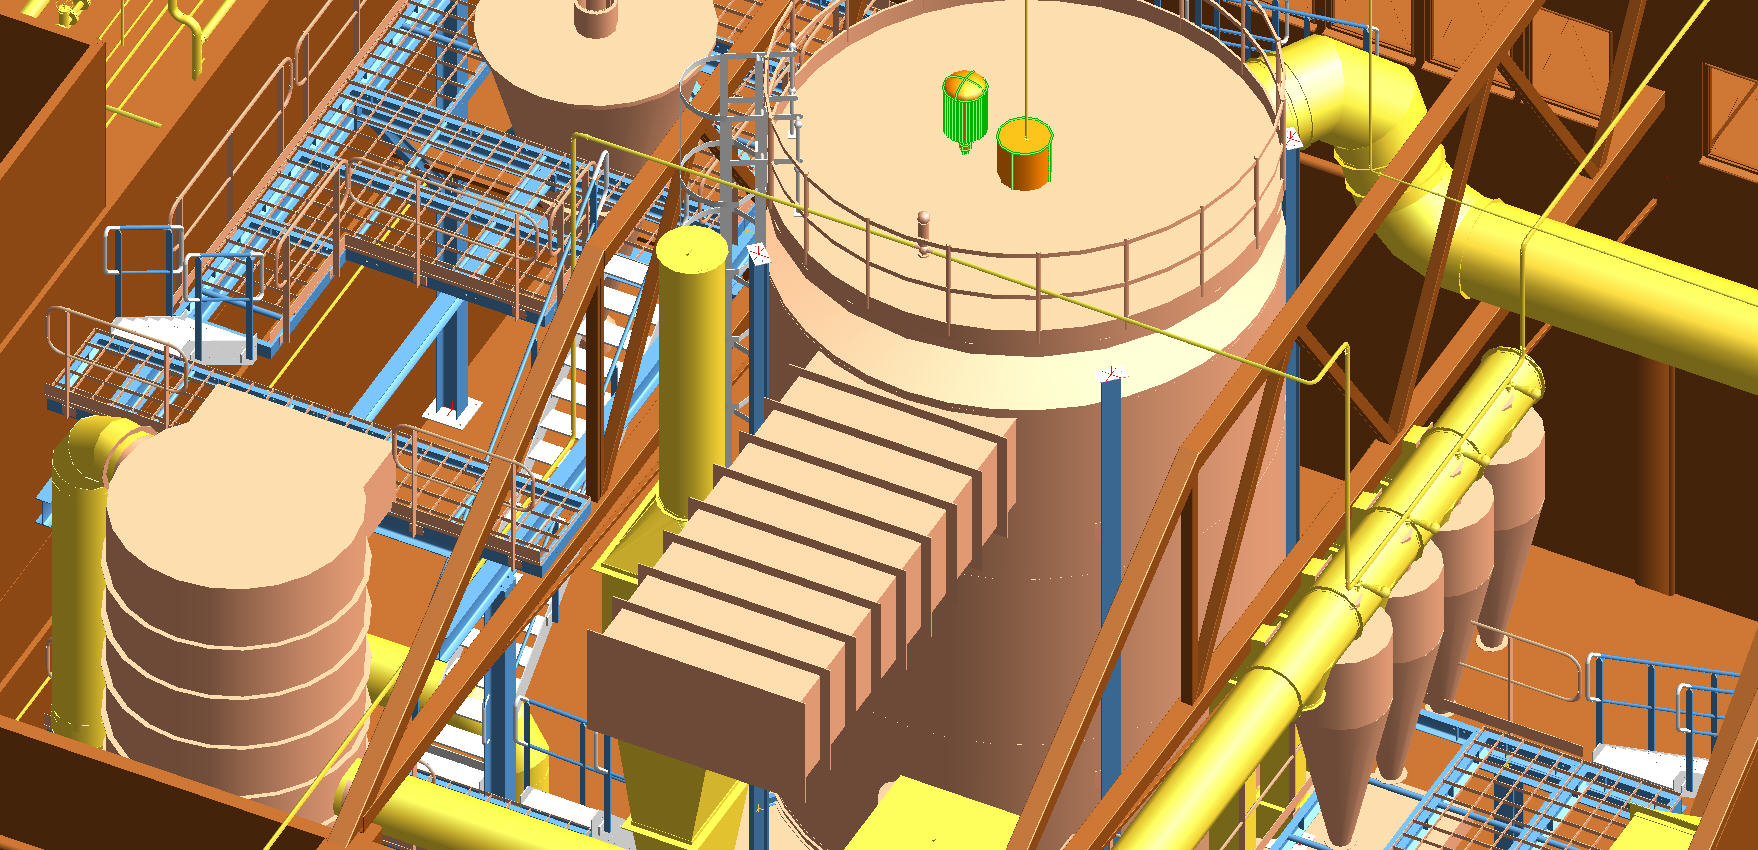 Process Installation @ API Factory for Producing Dextran - Spray Tower